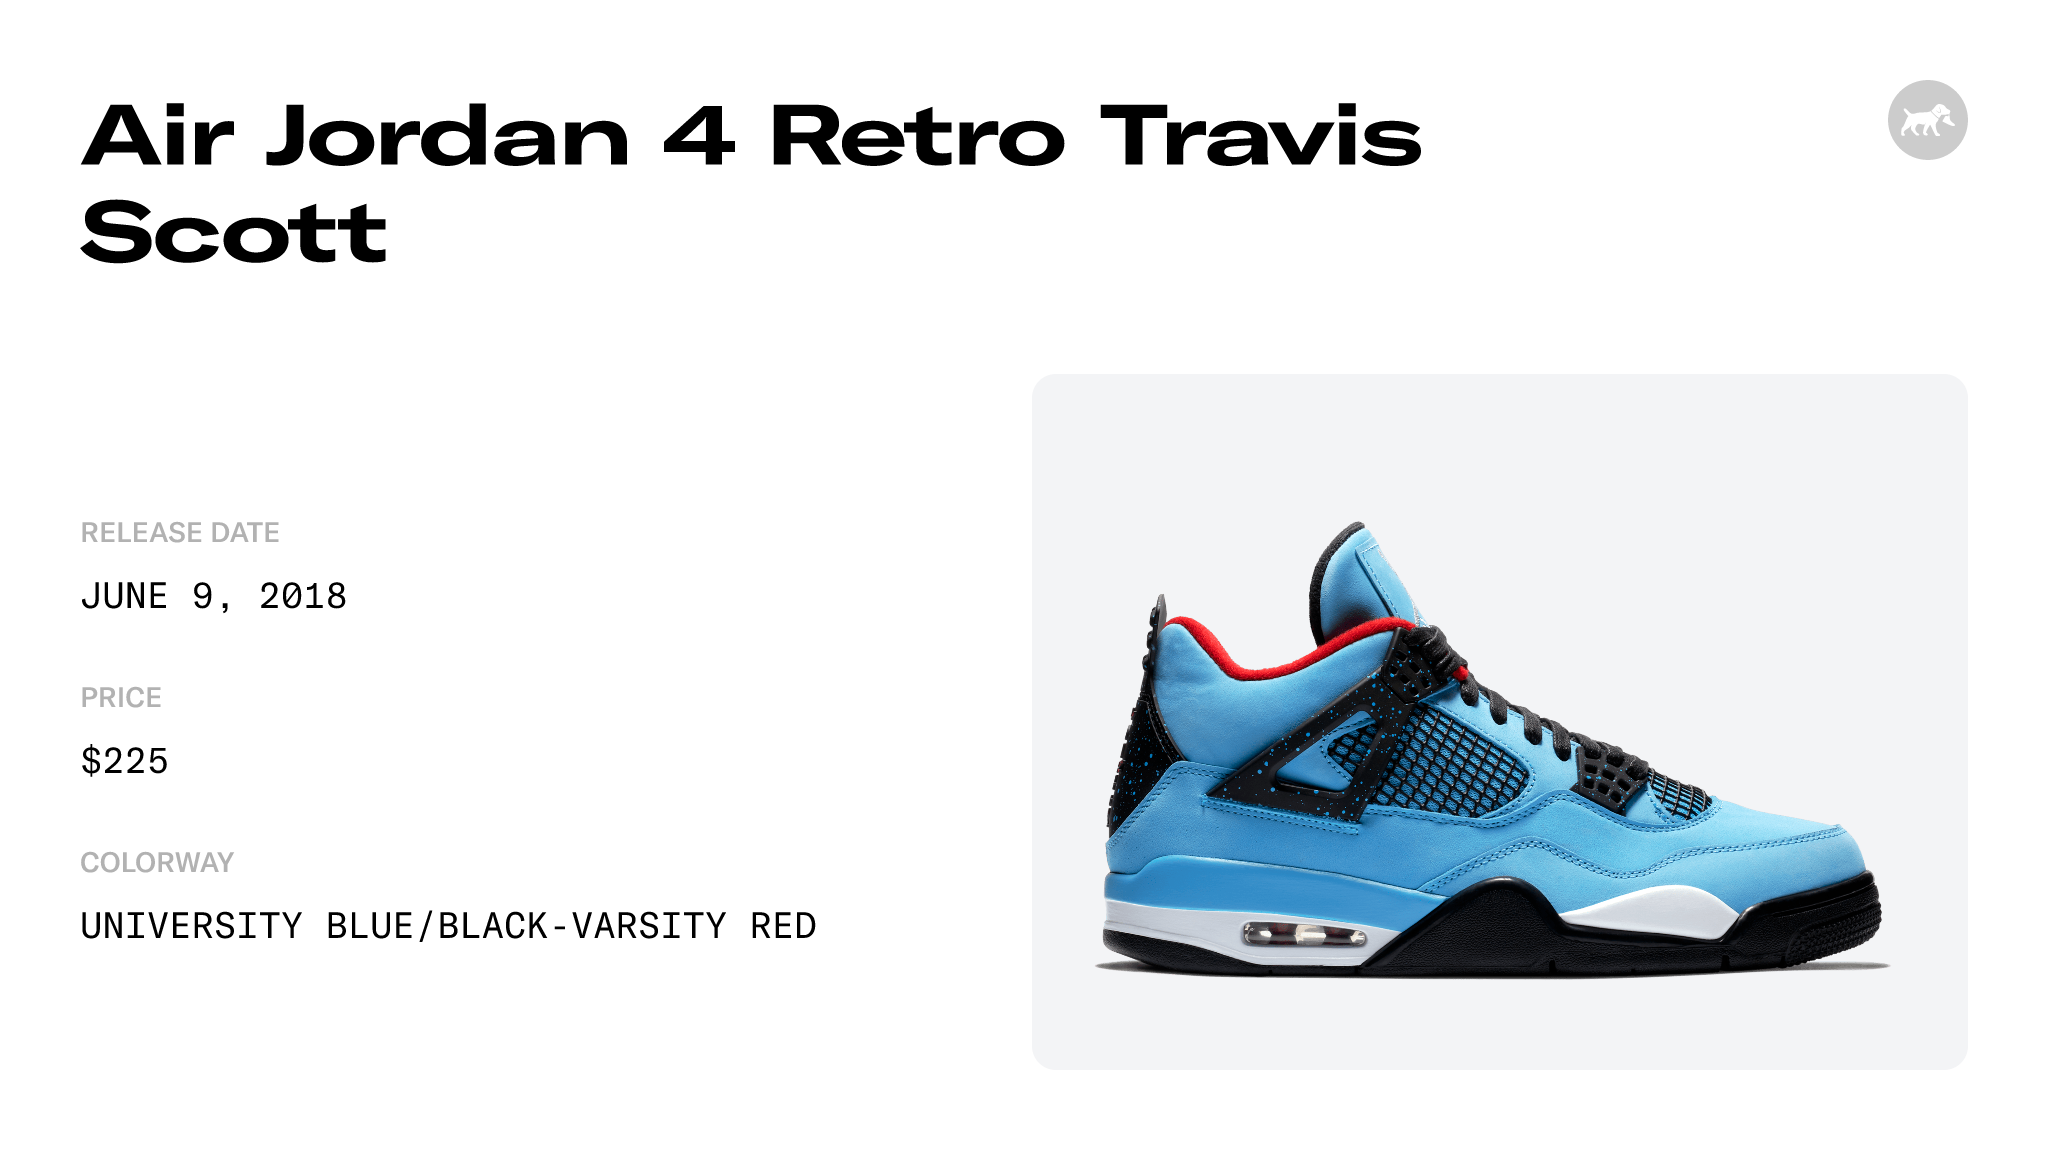 Air Jordan 4 Retro Travis Scott - 308497-406 Raffles and Release Date